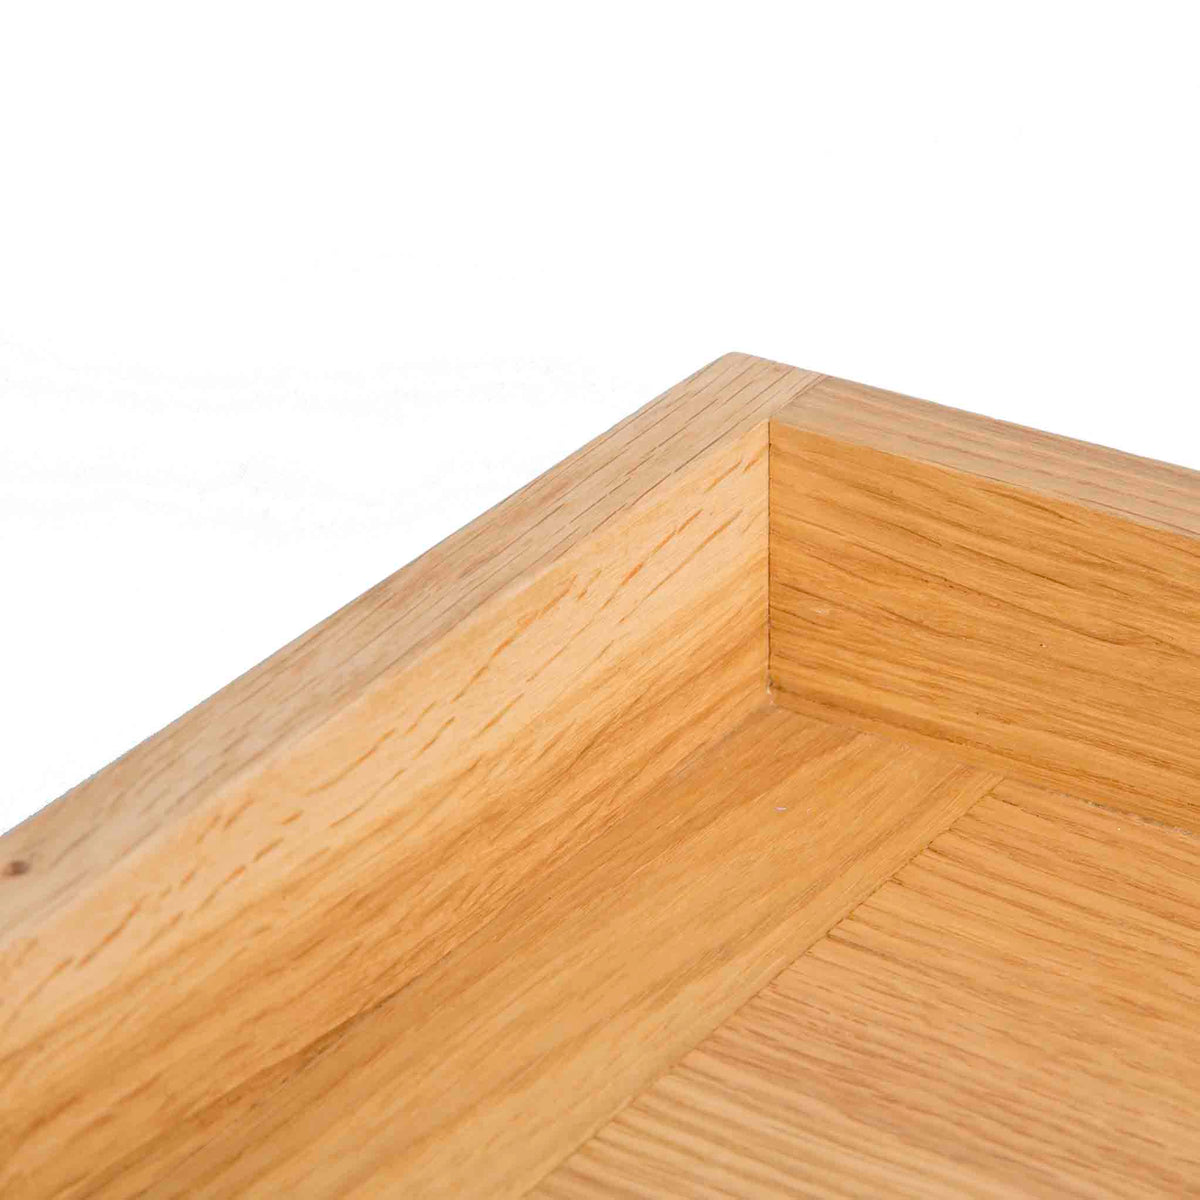 Farrow Grey Hallway Storage Bench - Close up of oak top edge to hold cushion